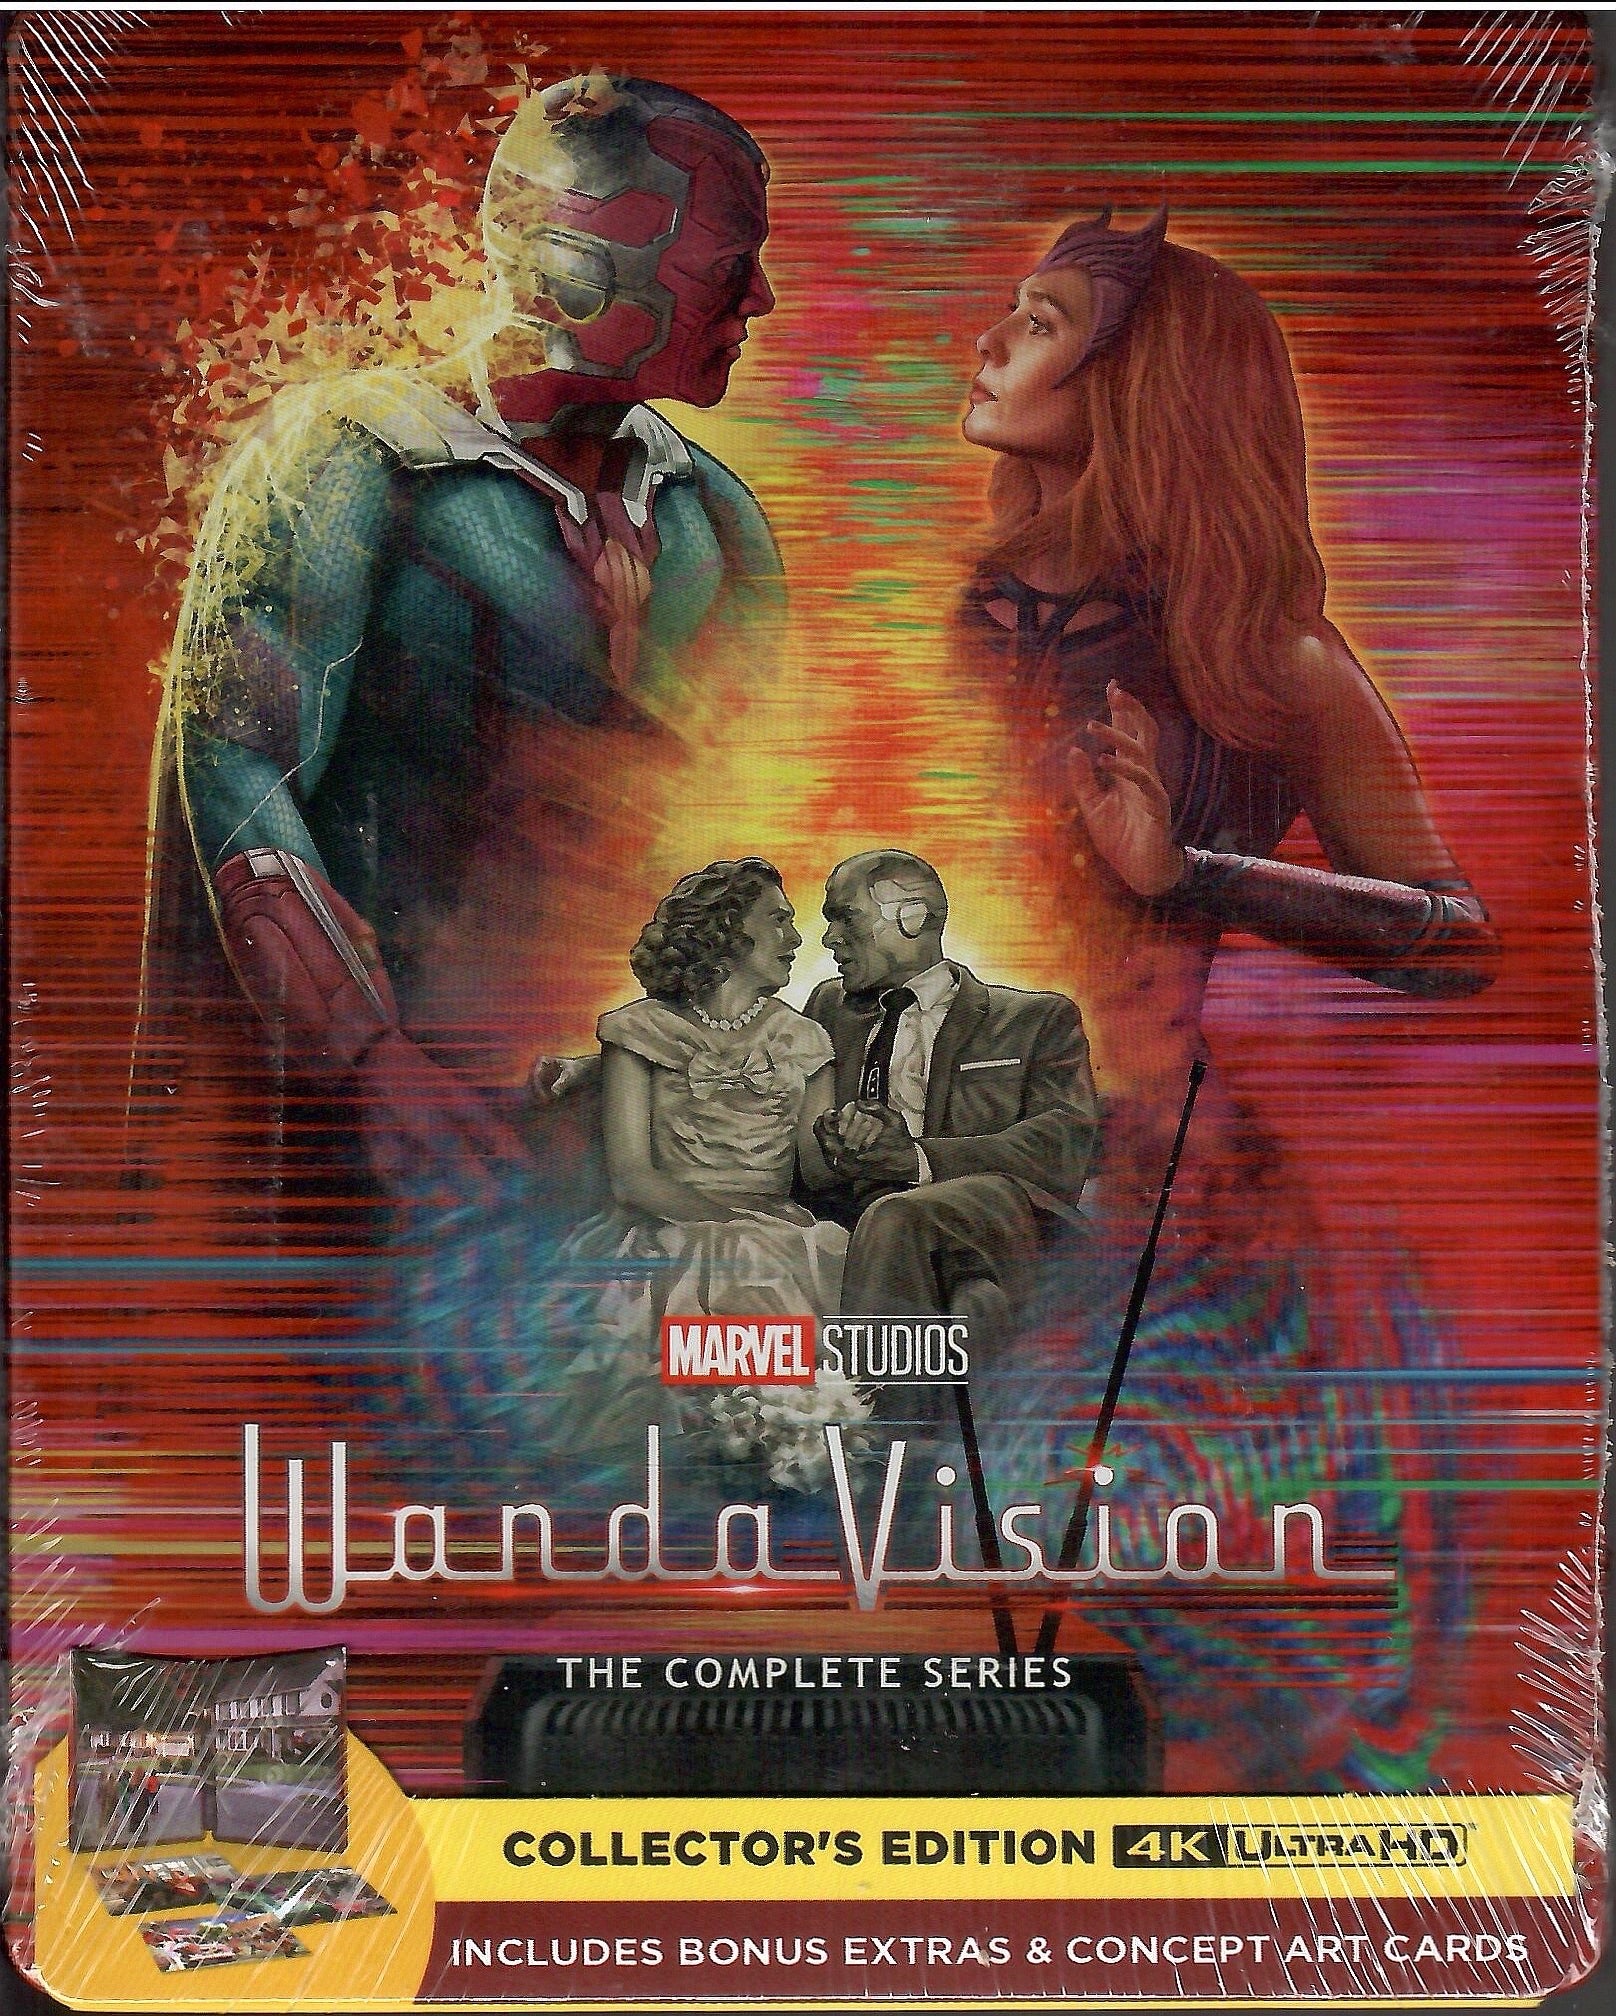 Marvel Studios Wandavison and Loki: Season 1 coming to Bluray and 4K UHD